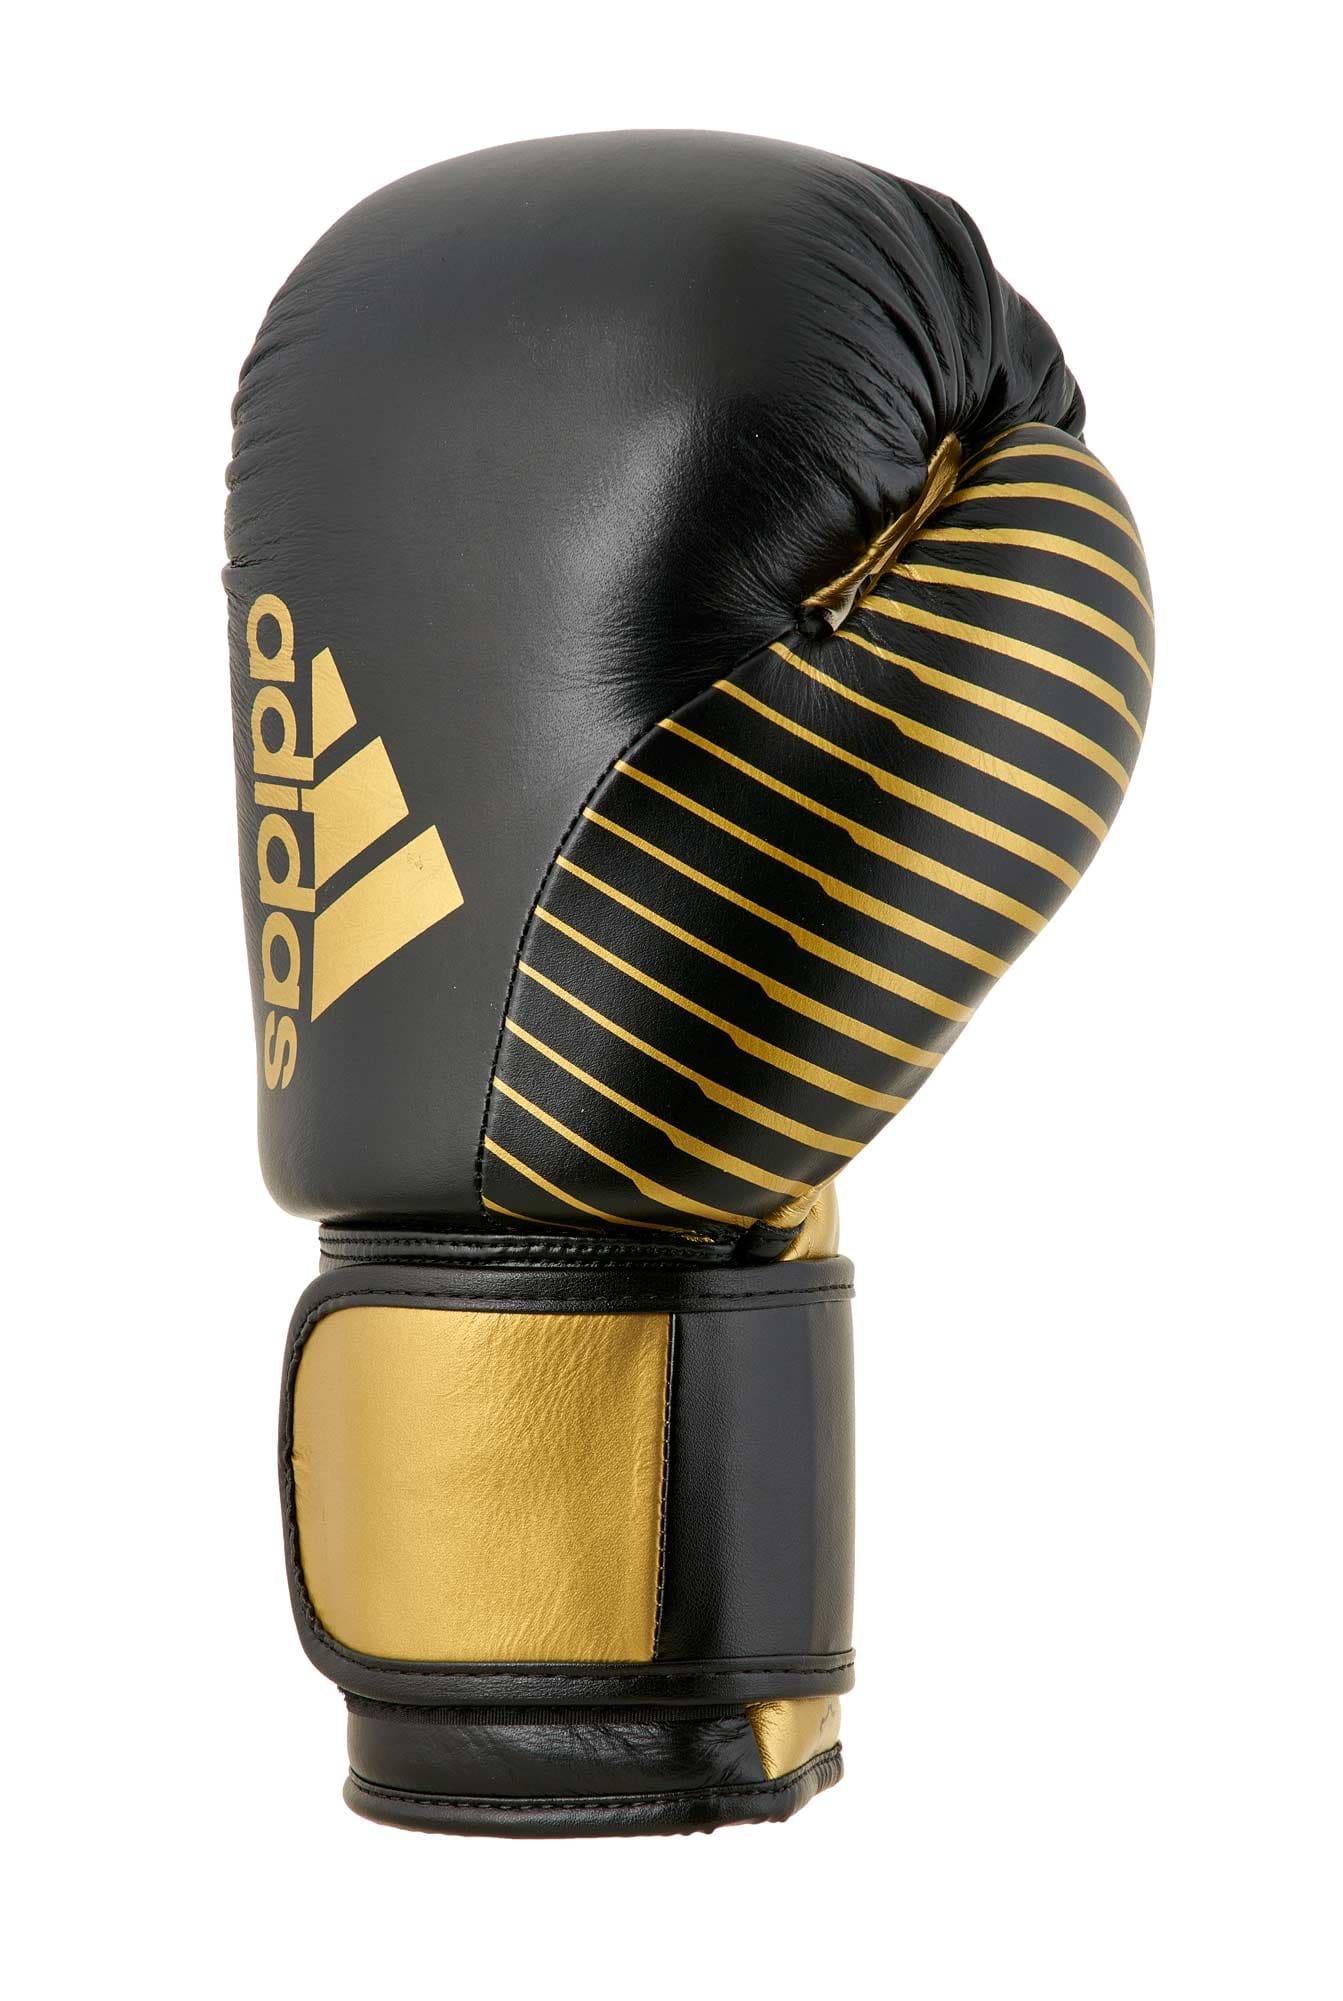 Adidas Kickboxing Wettkampf Boxhandschuhe Schwarz/Gold Online kaufen ✓ |  EMPAROR